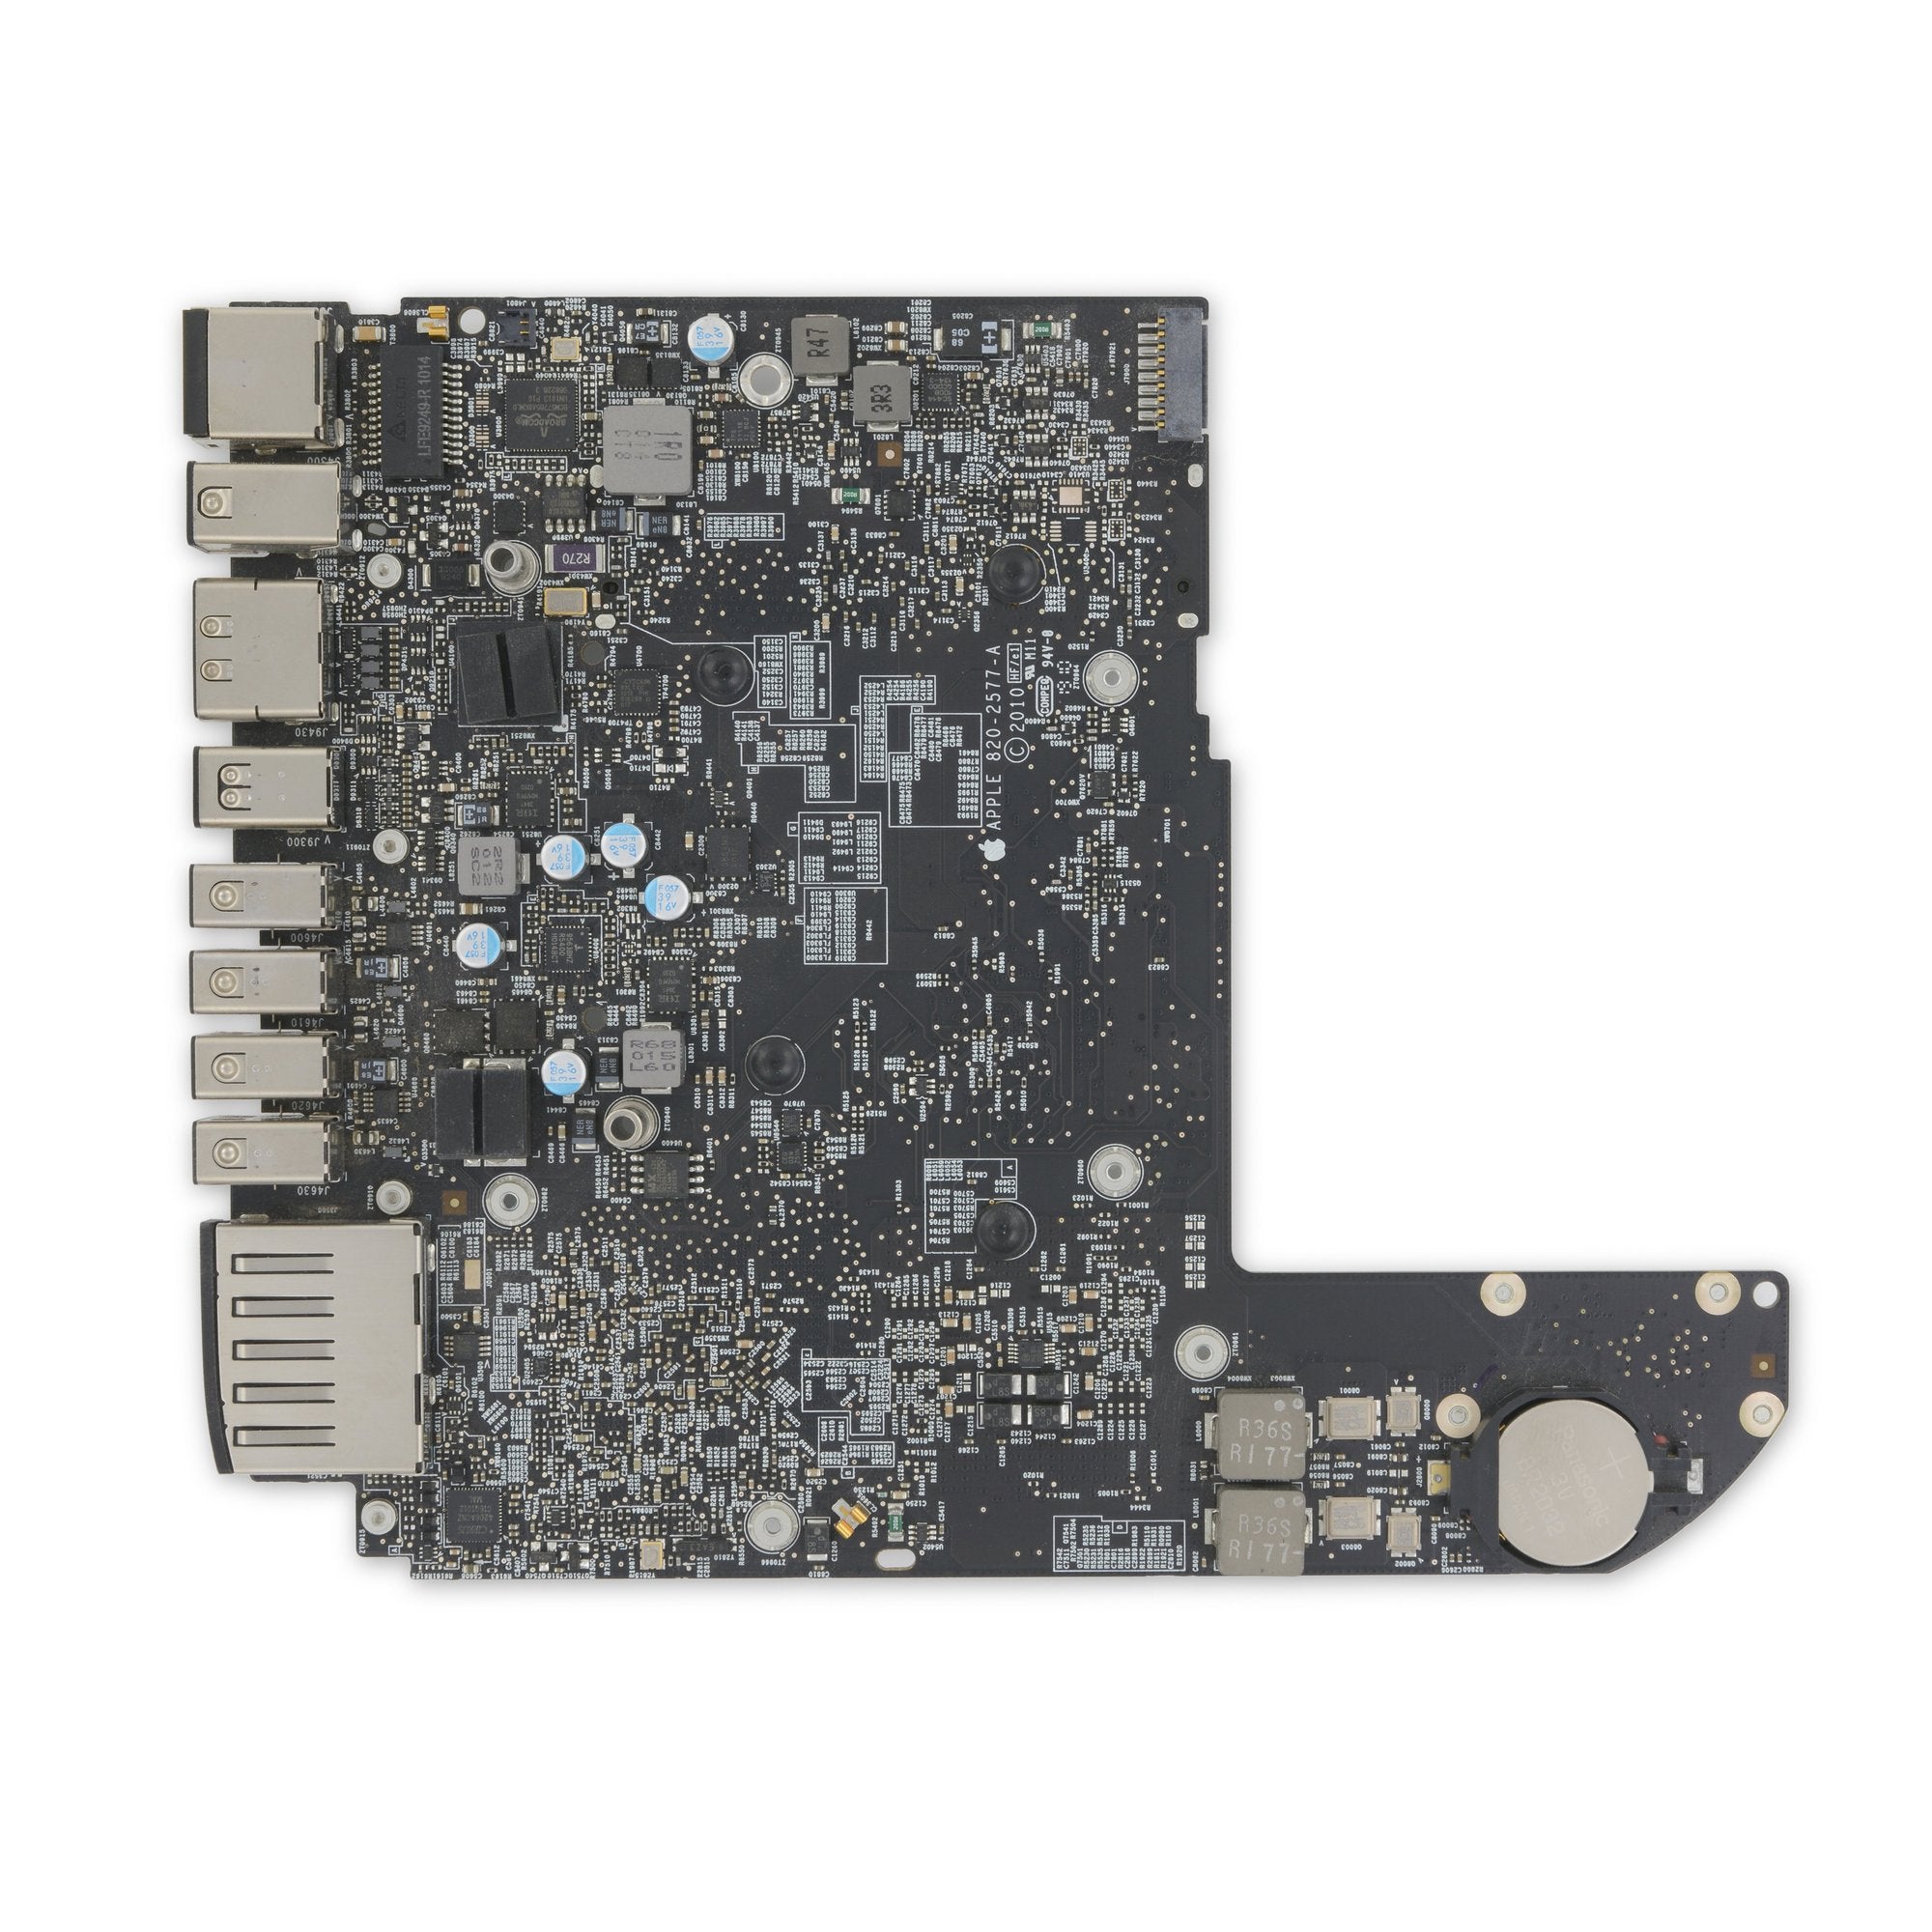 Mac mini A1347 (Mid 2010) 2.66 GHz Logic Board Used